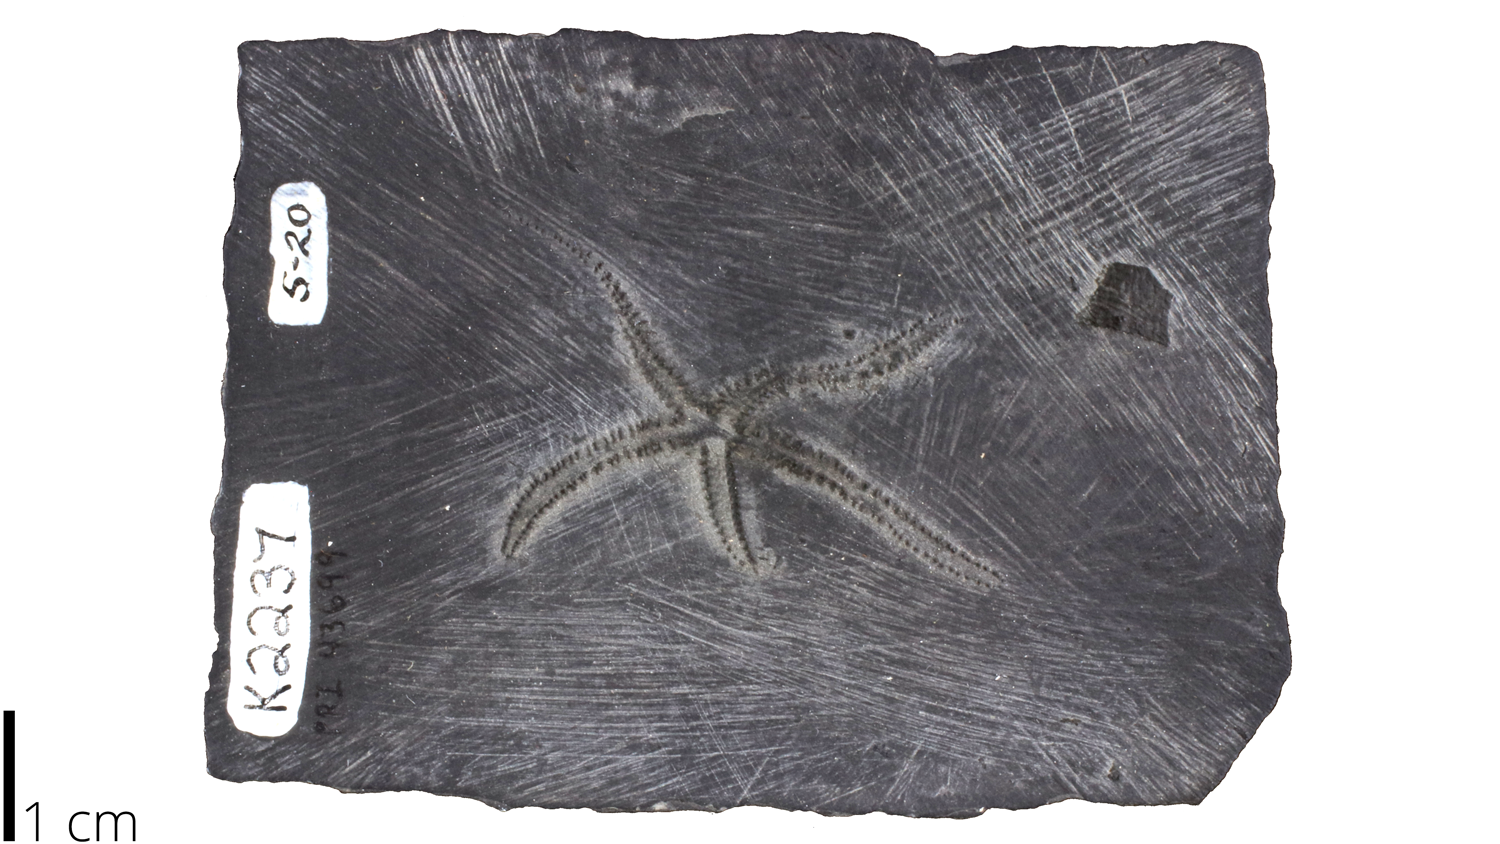 Urastella asperula fossil sea star